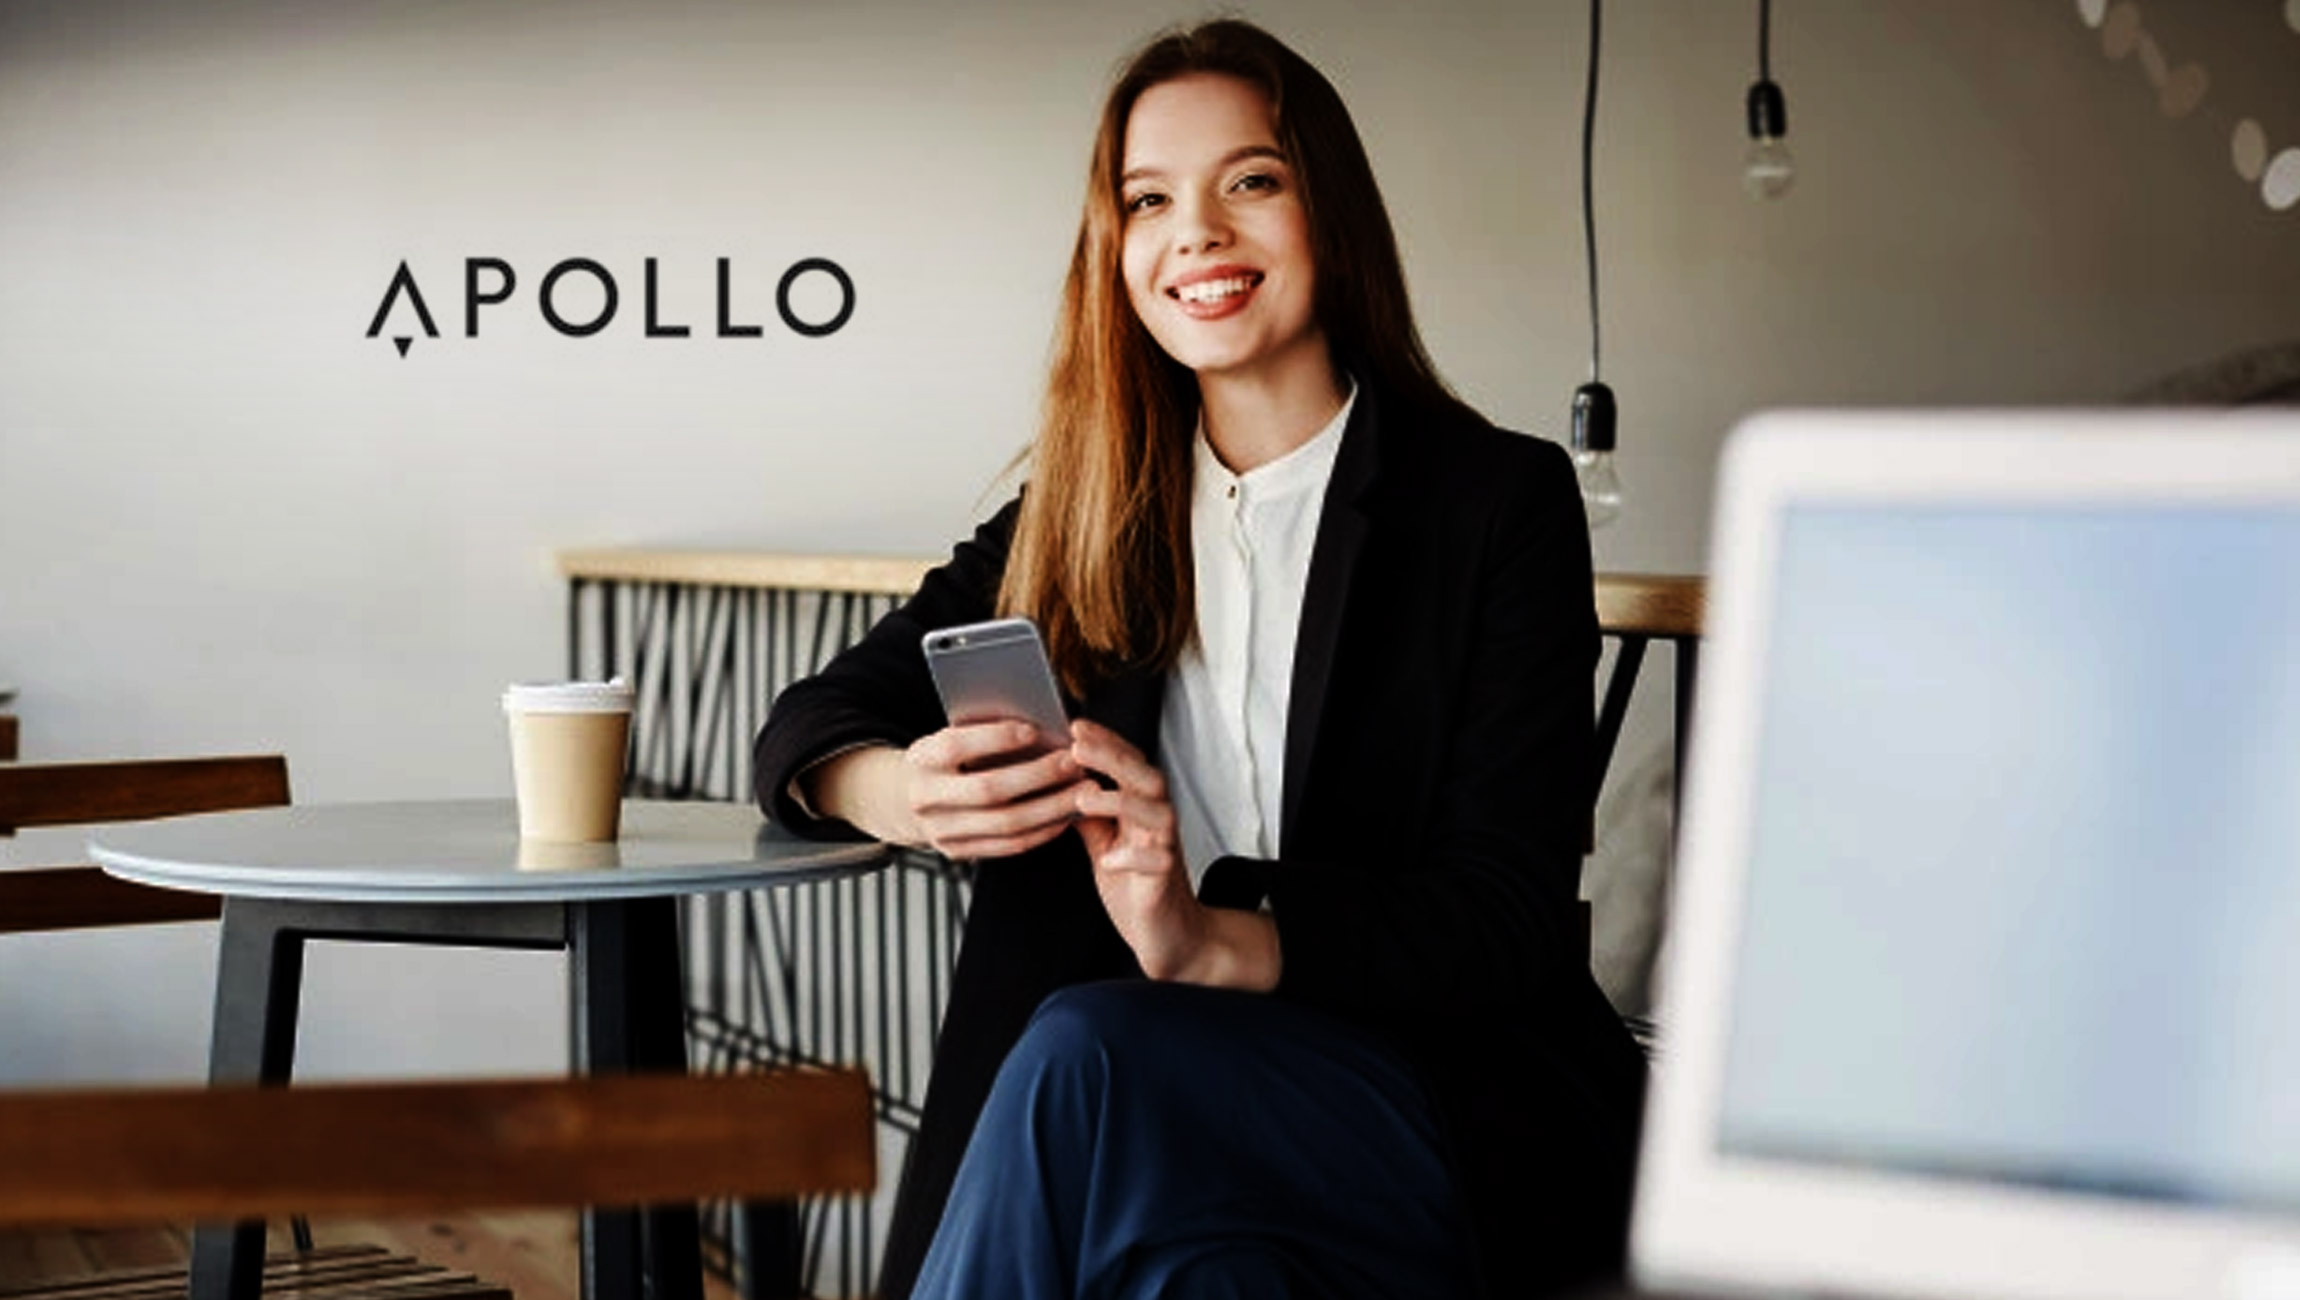 Apollo.io Crossed the 5,000 Paying Customer Mark